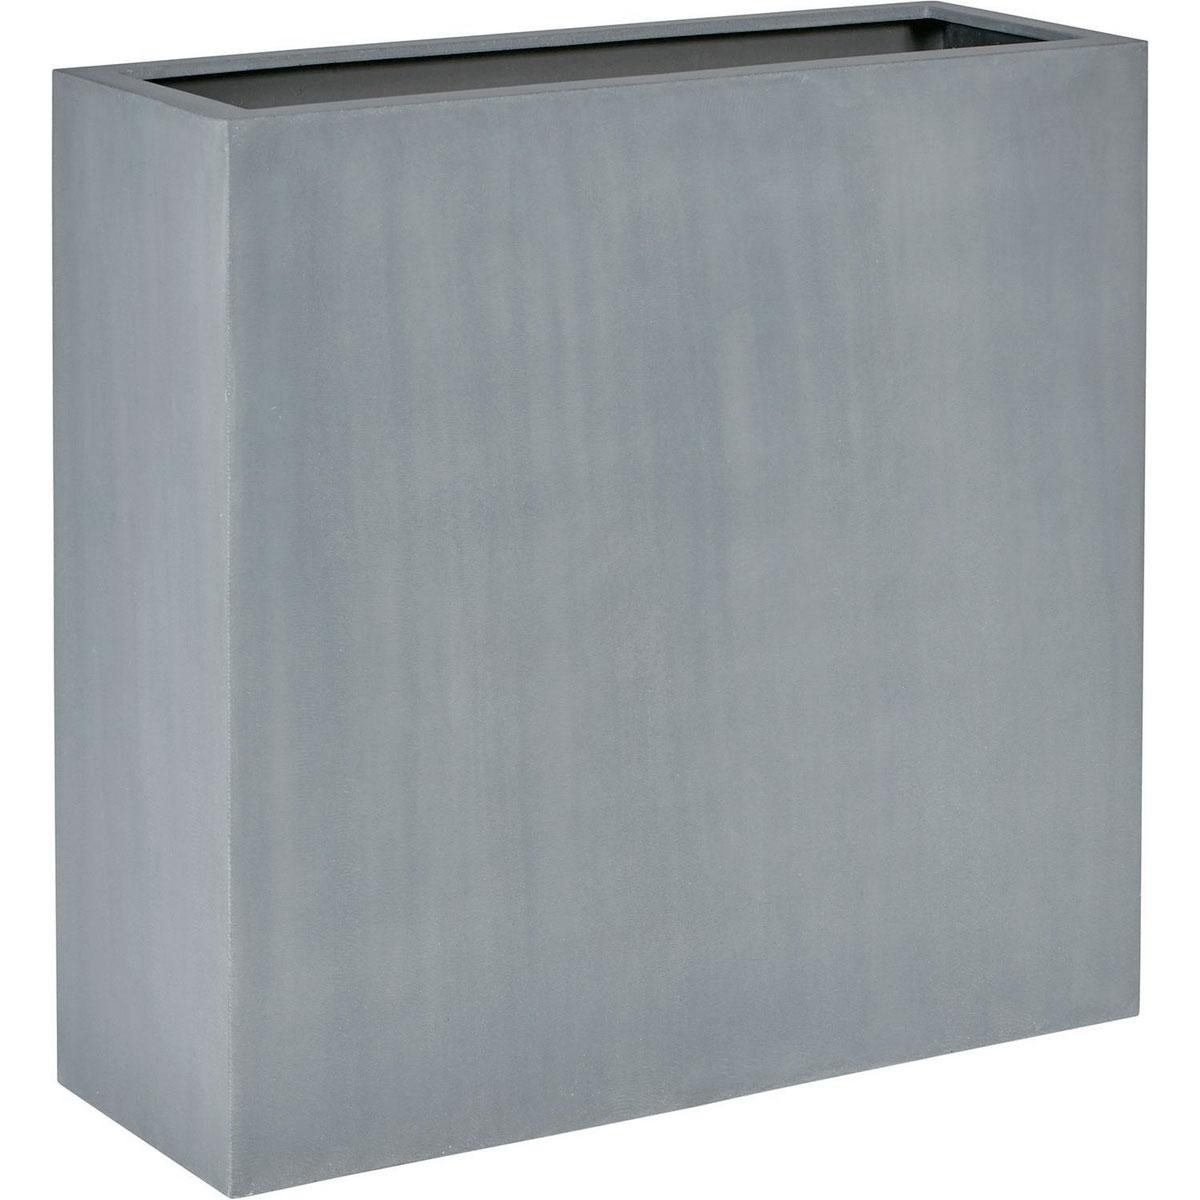 Solid room divider rectangular fiberstone natural grey w69